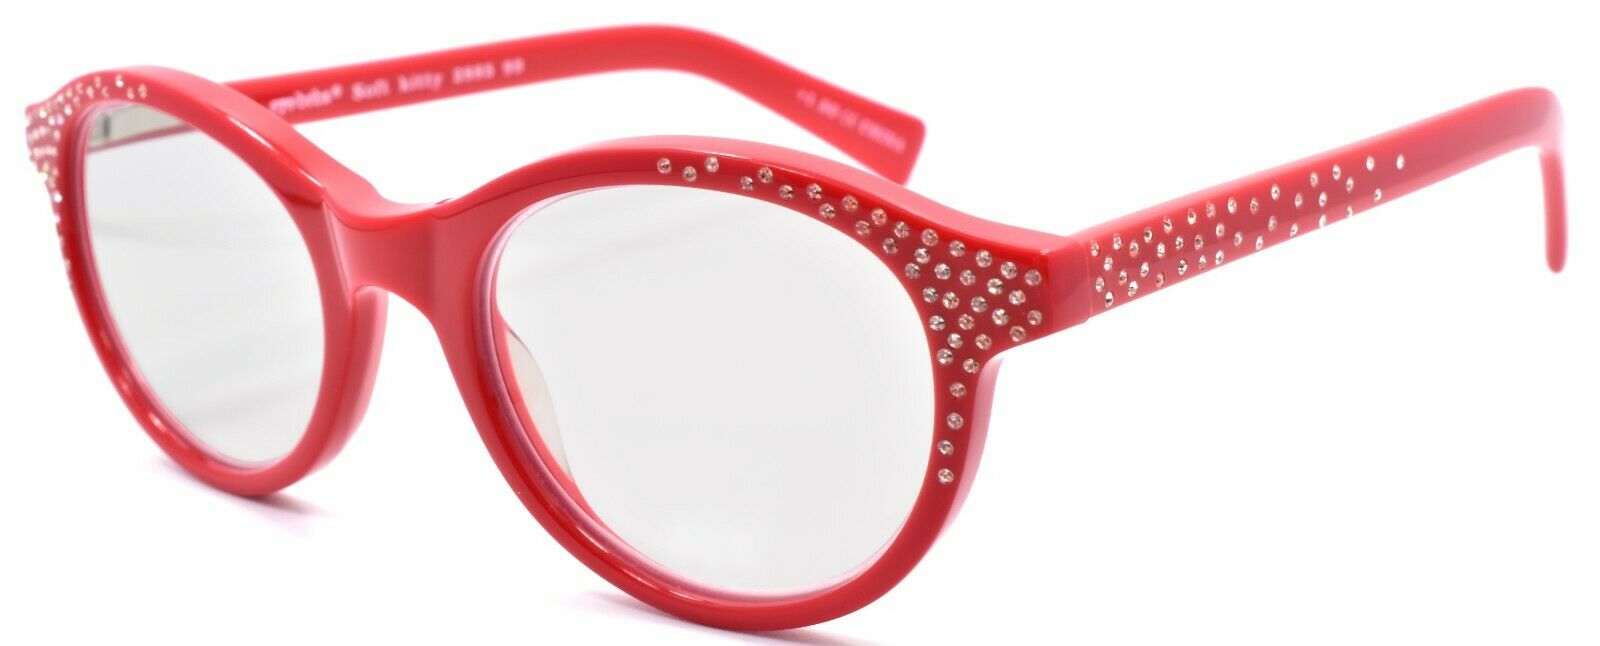 1-Eyebobs Soft Kitty 2885 99 Women's Reading Glasses Red / Rhinestones +2.50-842446052256-IKSpecs